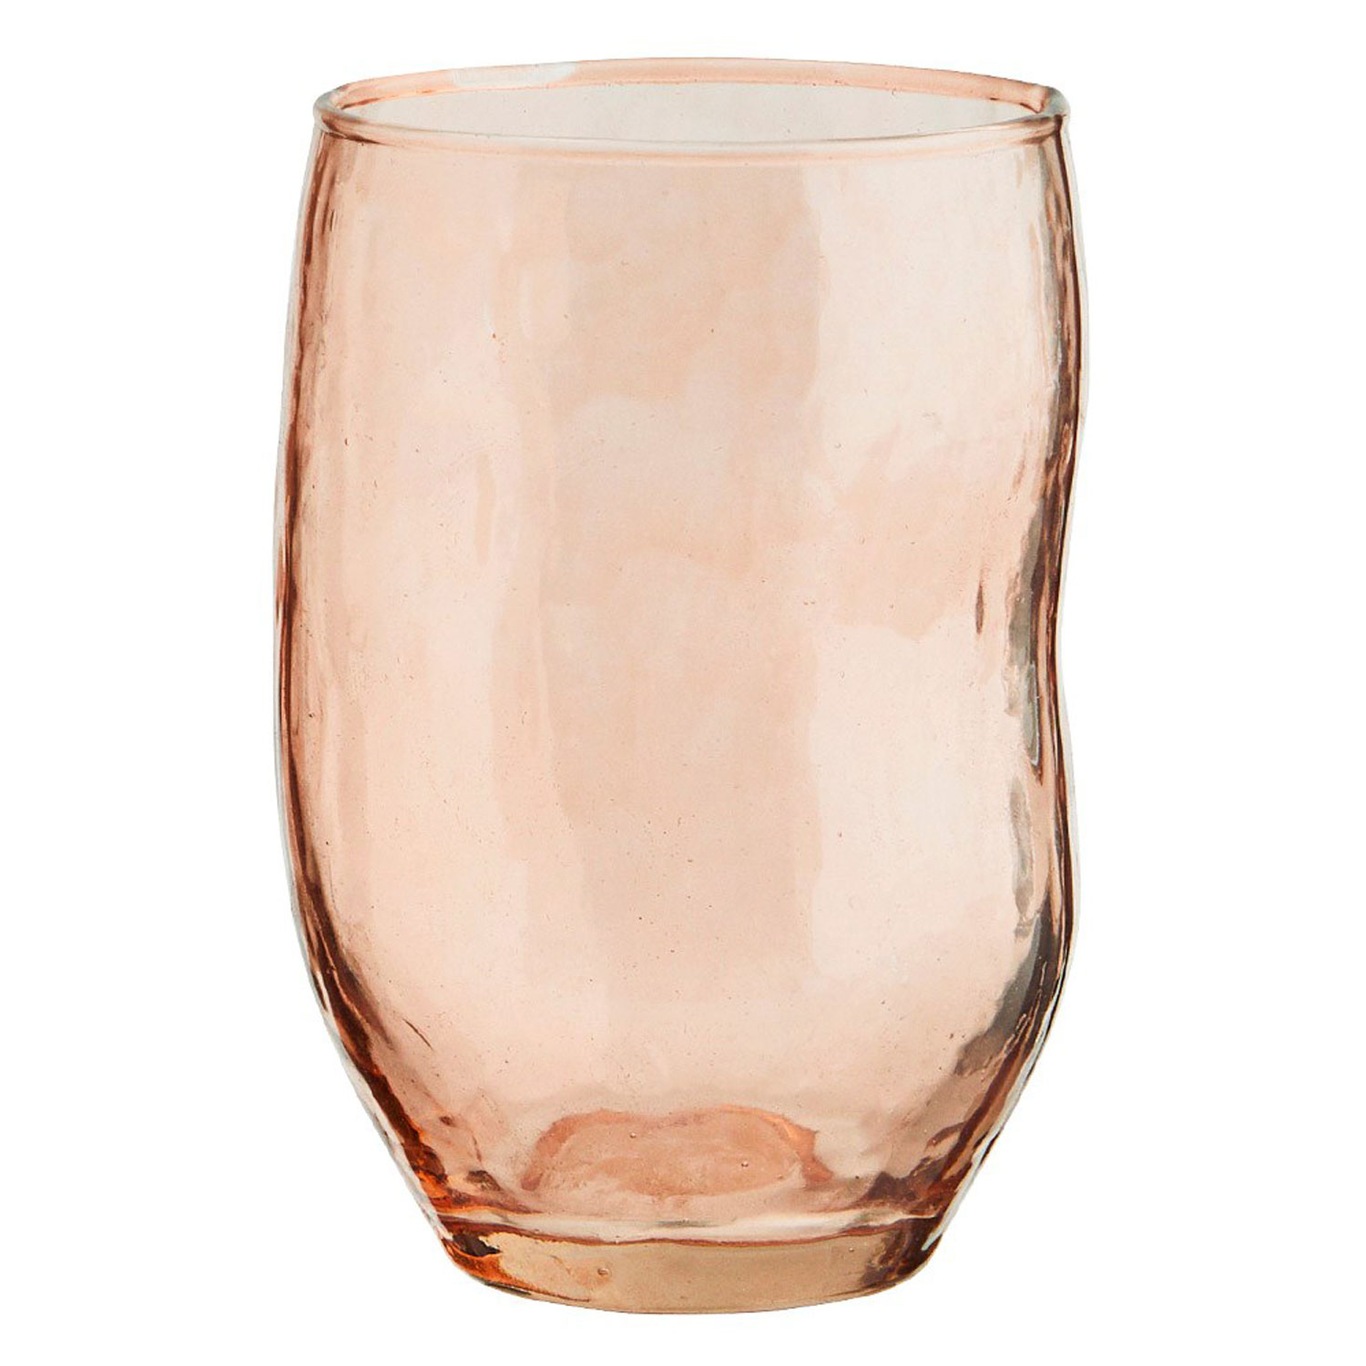 https://royaldesign.com/image/2/madam-stoltz-hammered-drinking-glass-30-cl-1?w=800&quality=80